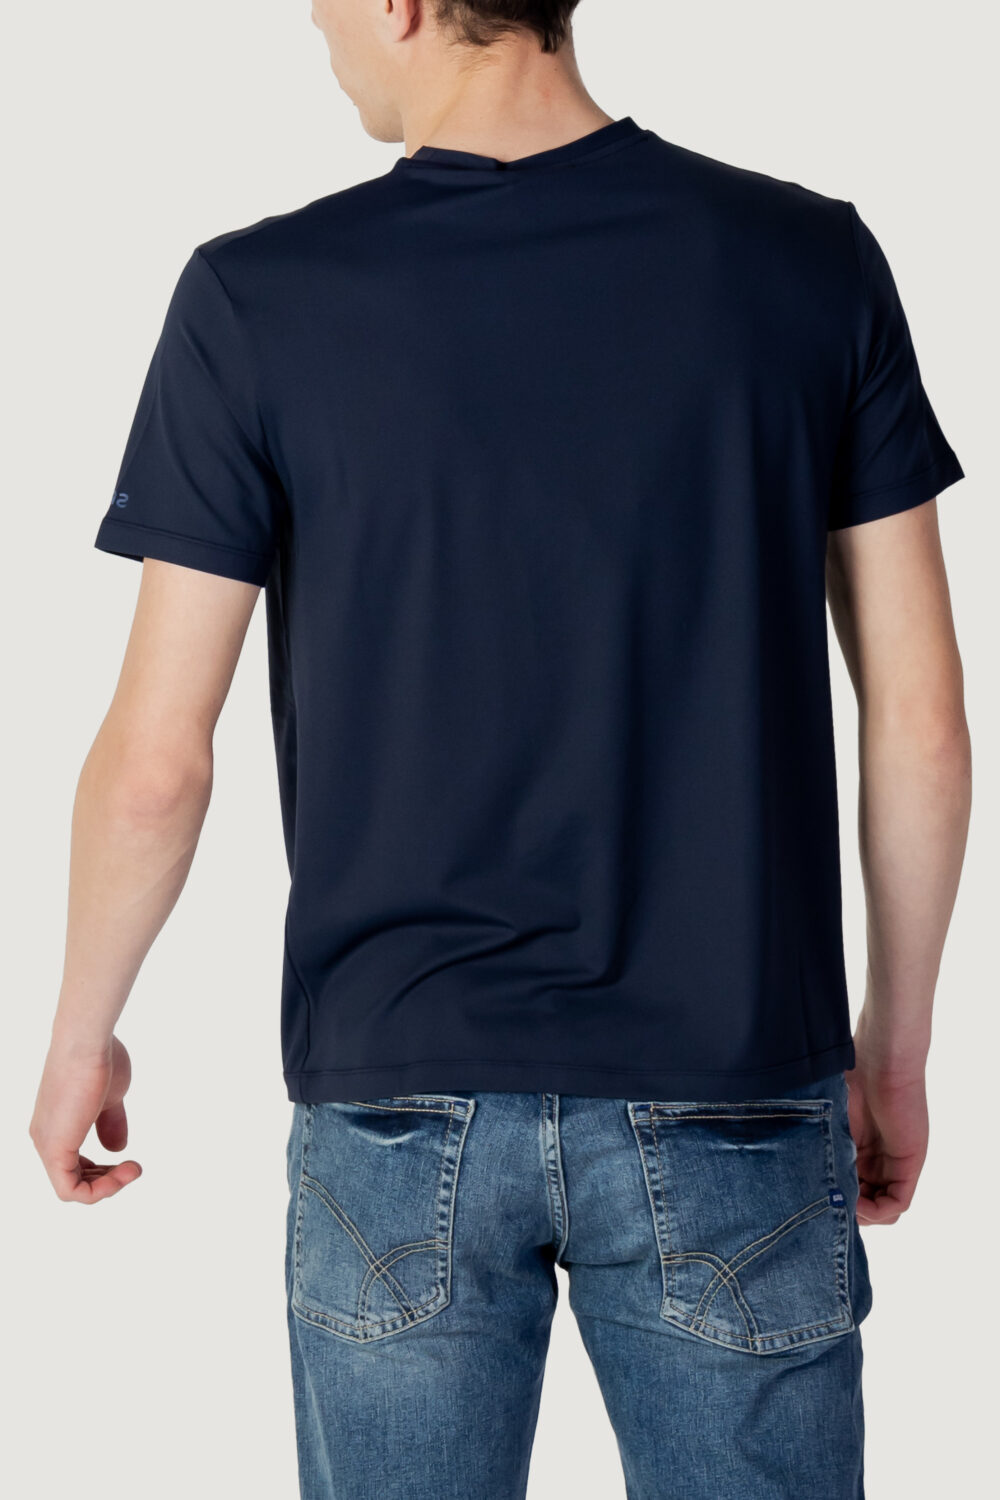 T-shirt Suns paolo lux Blu marine - Foto 3